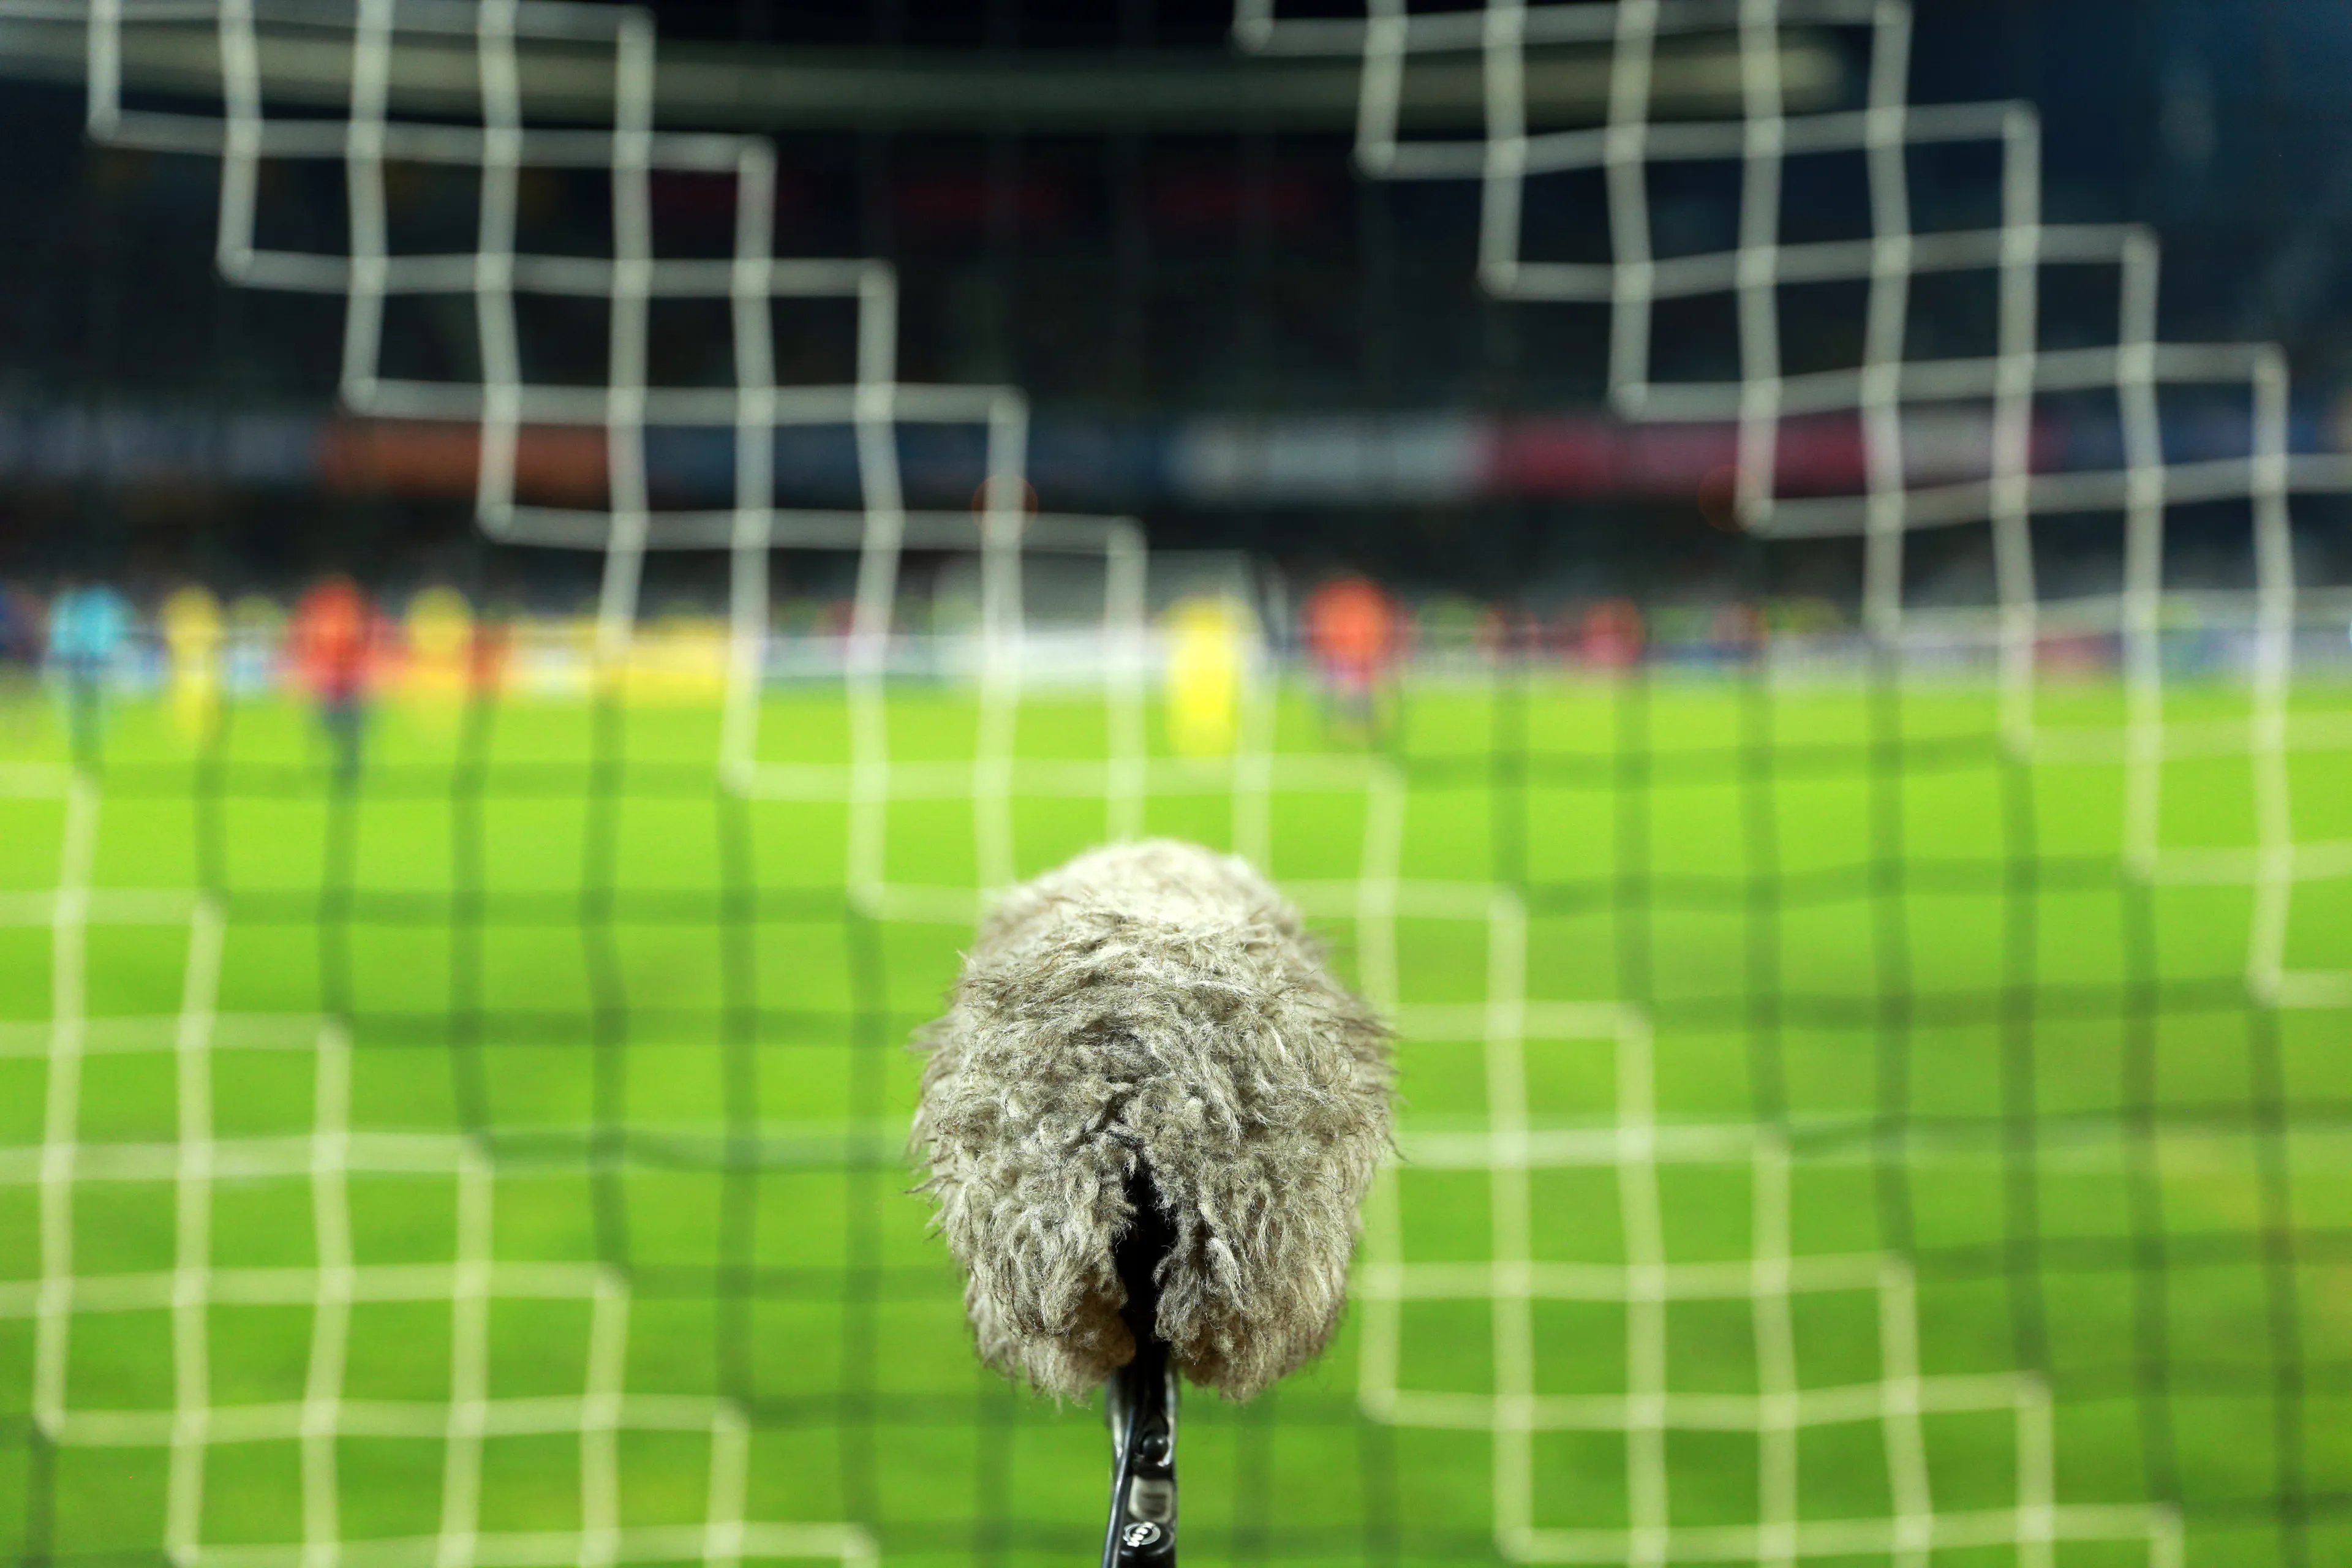 big and furry sport microphone on a soccer field b 2022 03 13 02 45 42 utc